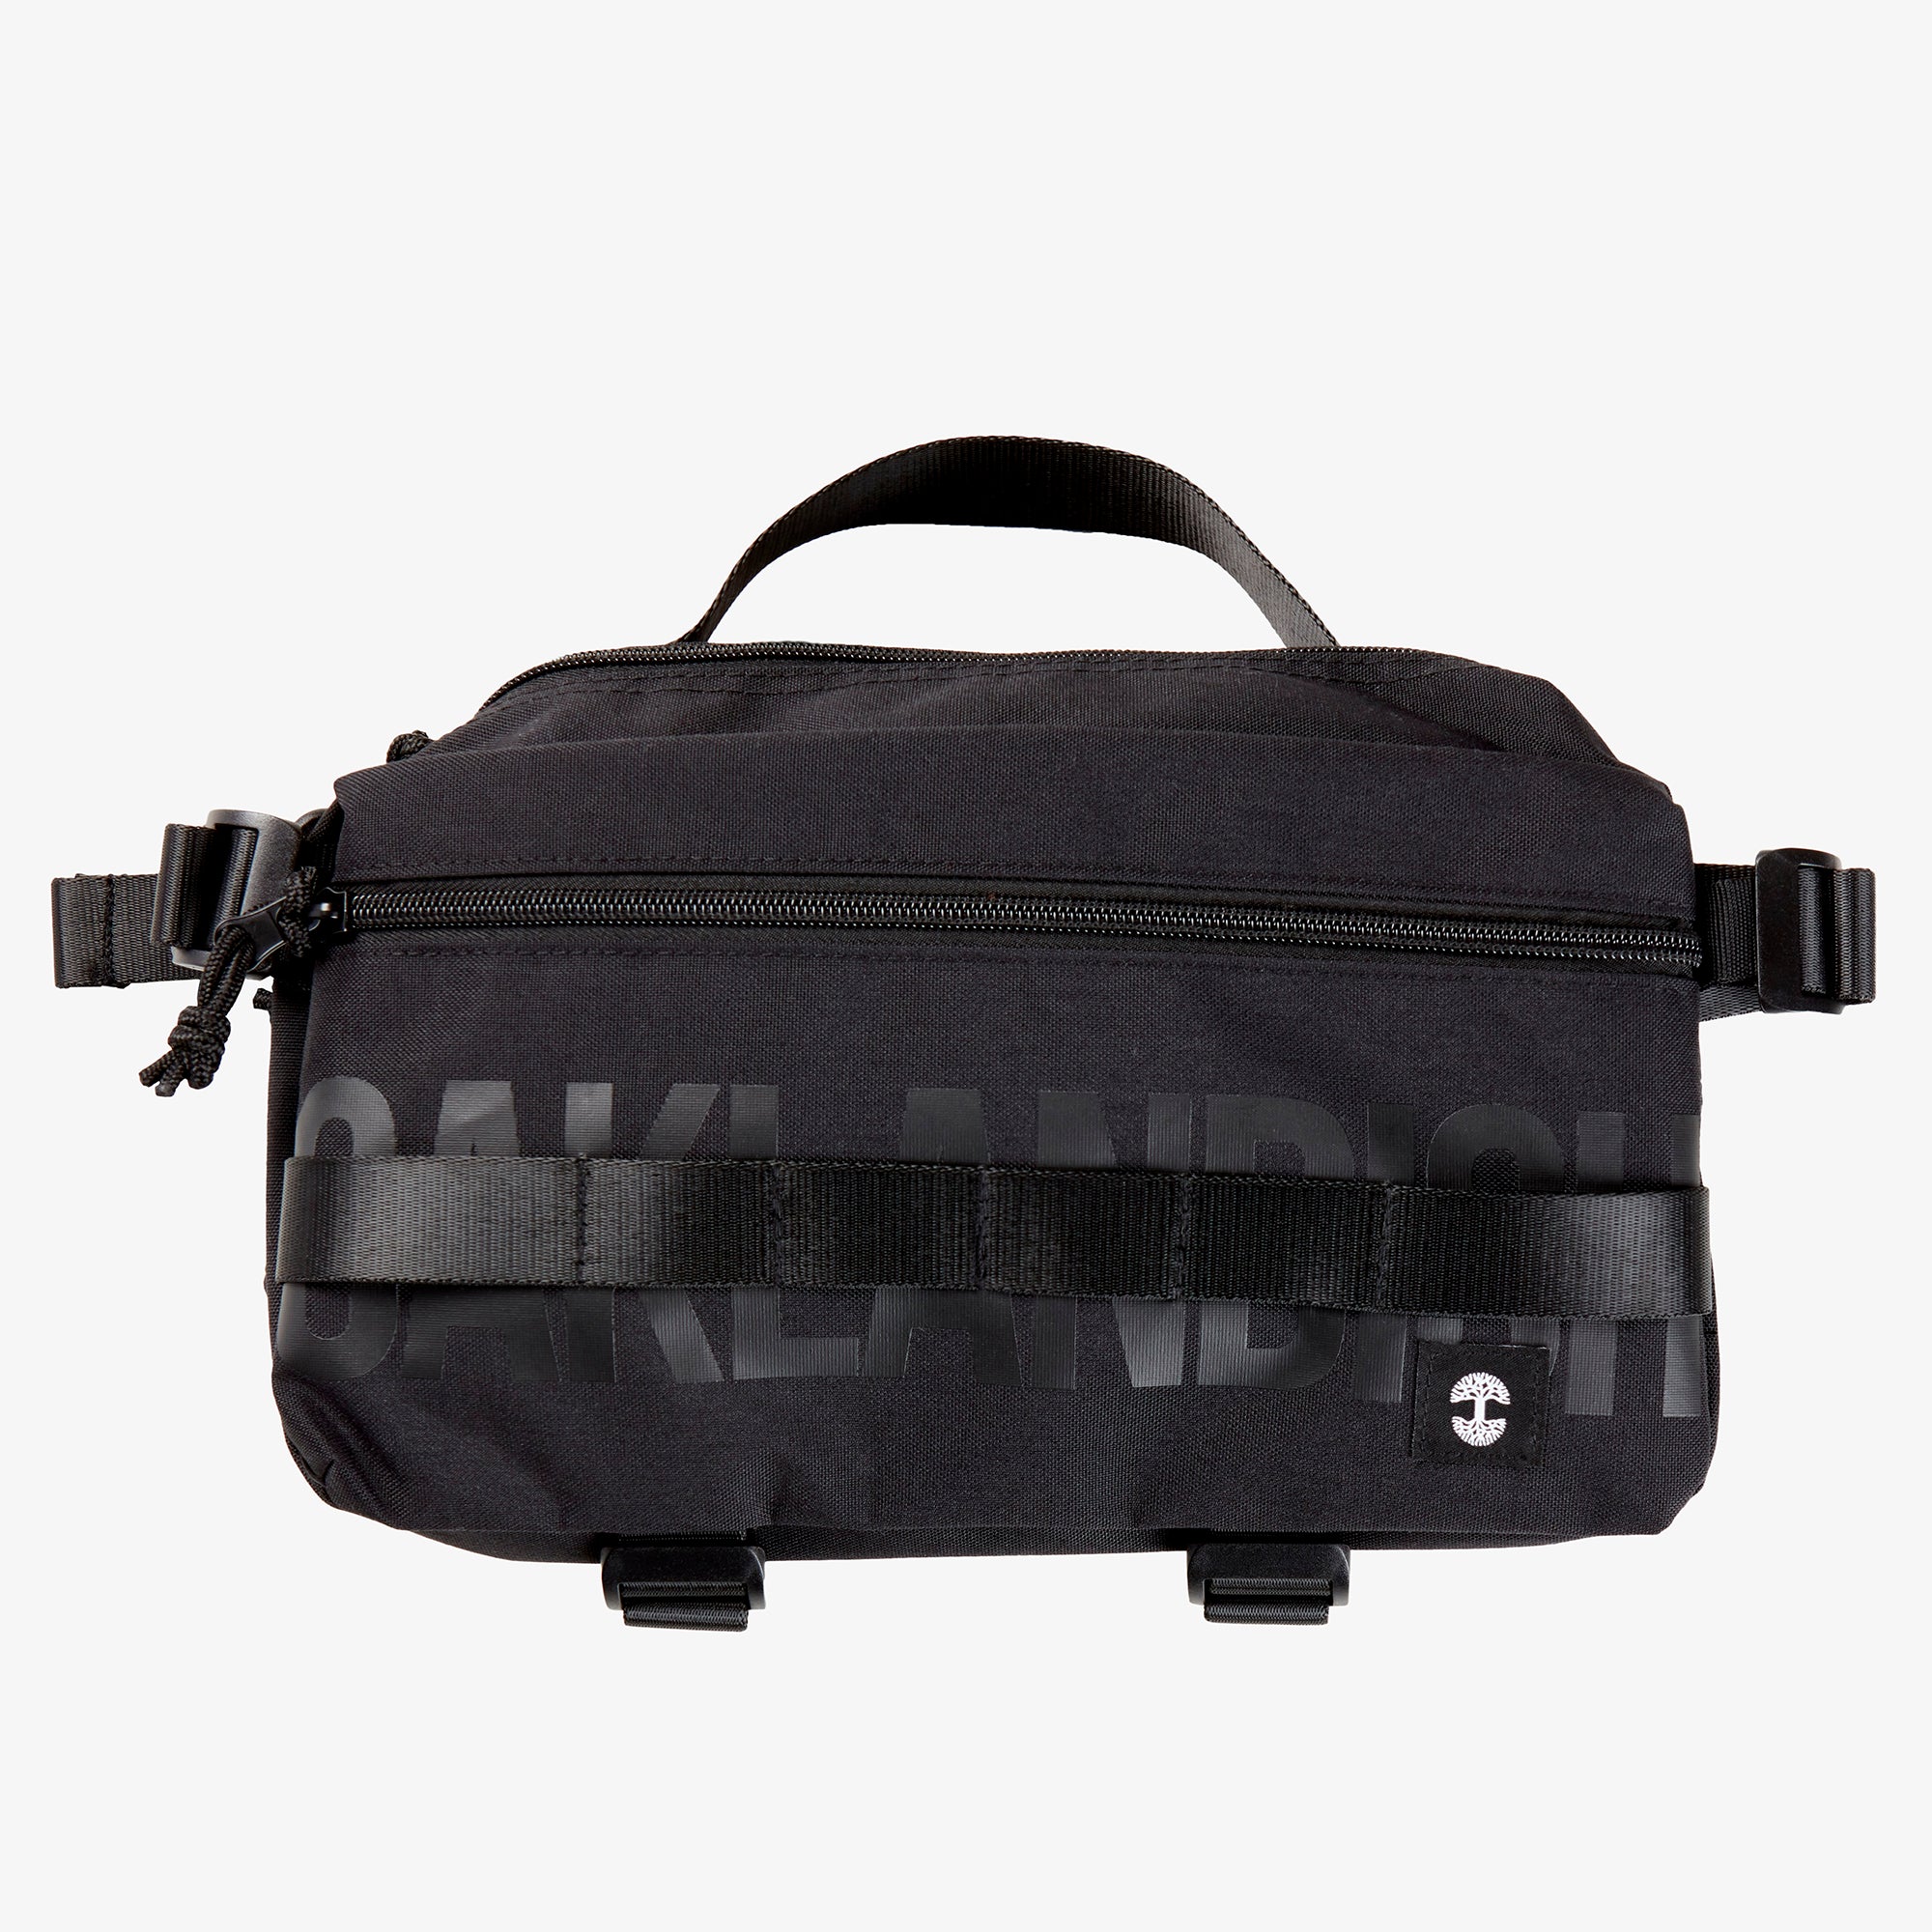 A black nylon hip bag with a black Oaklandish wordmark, front zipper, top handle, waist belt, & small white Oaklandish tree logo.